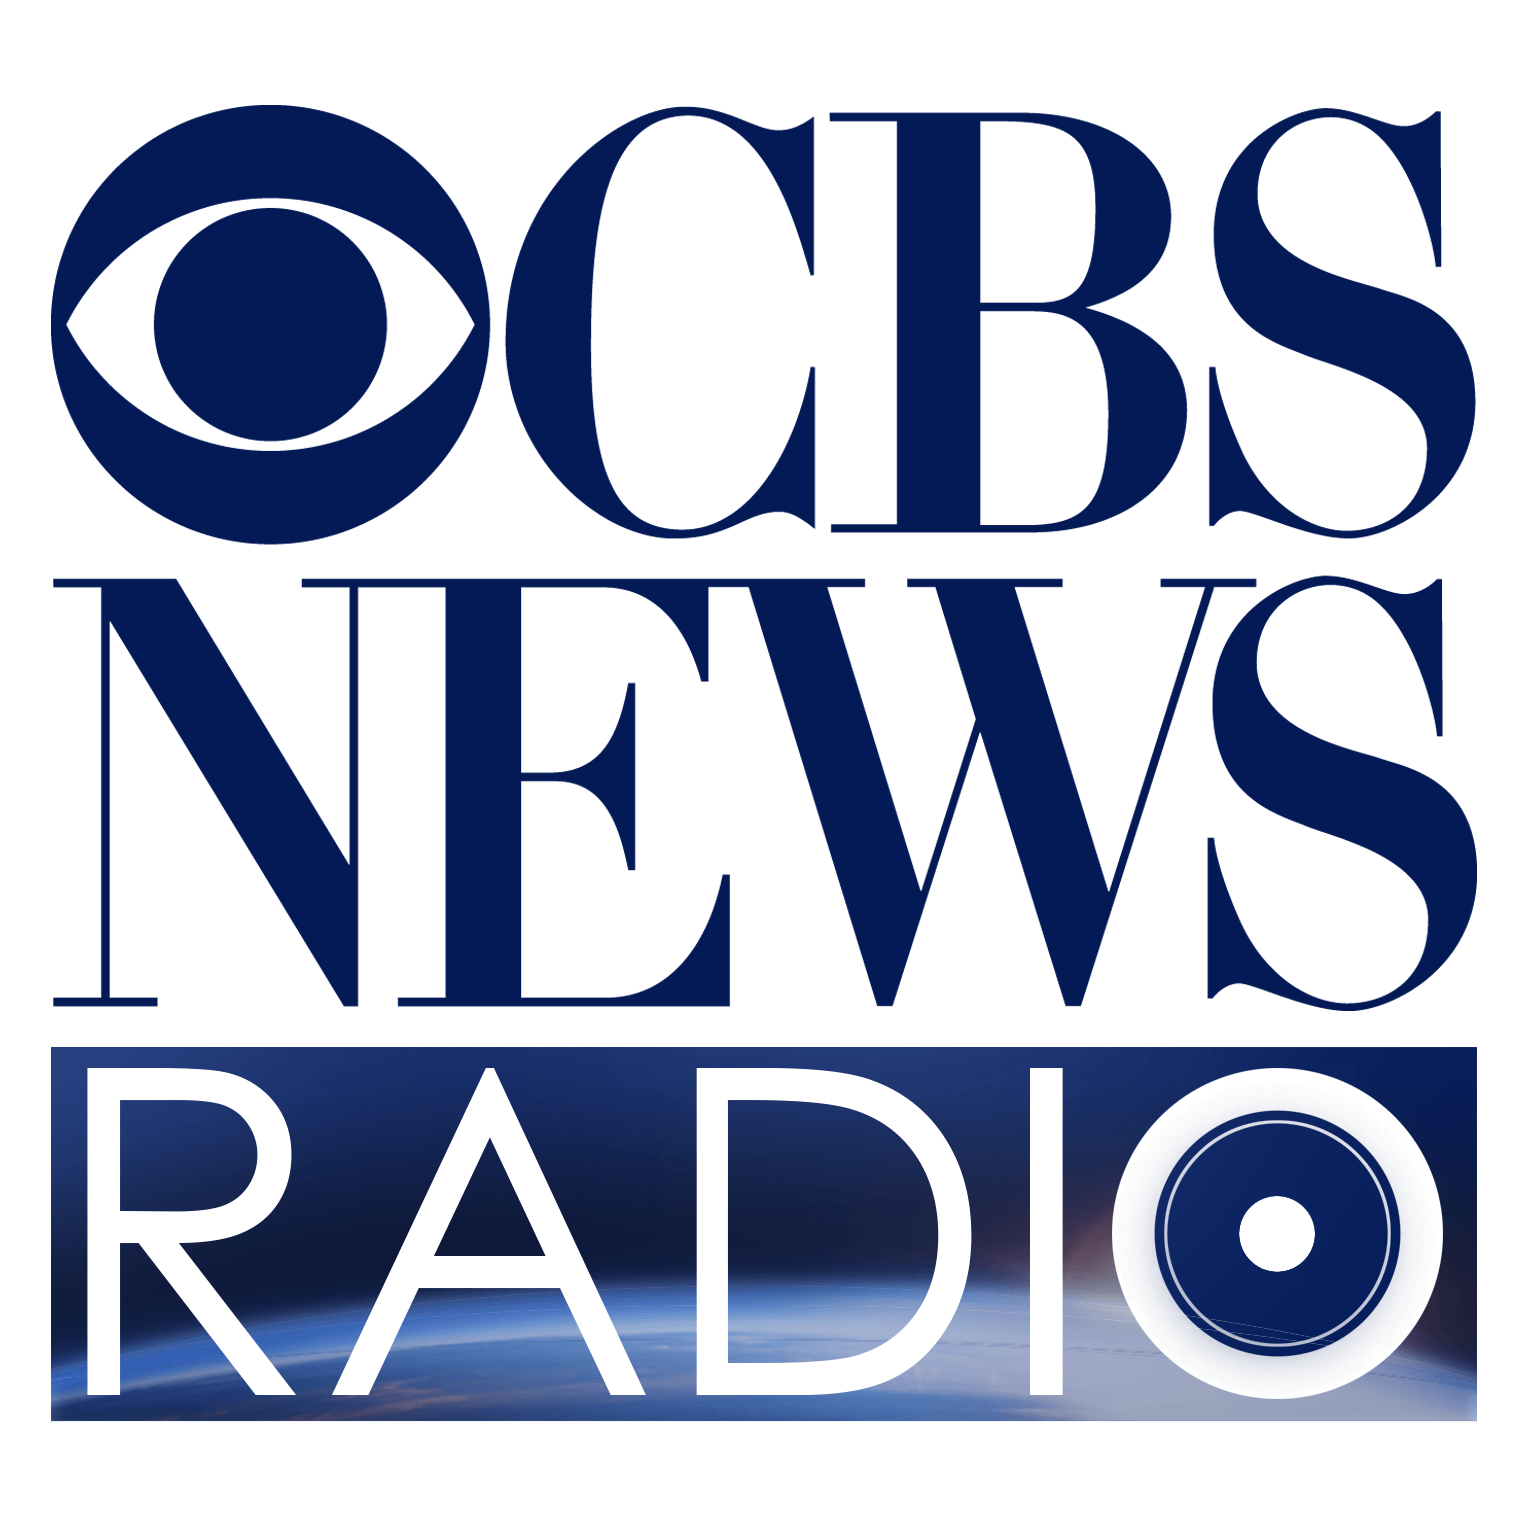 CBS Radio Logo - CBS News Radio | Logopedia | FANDOM powered by Wikia